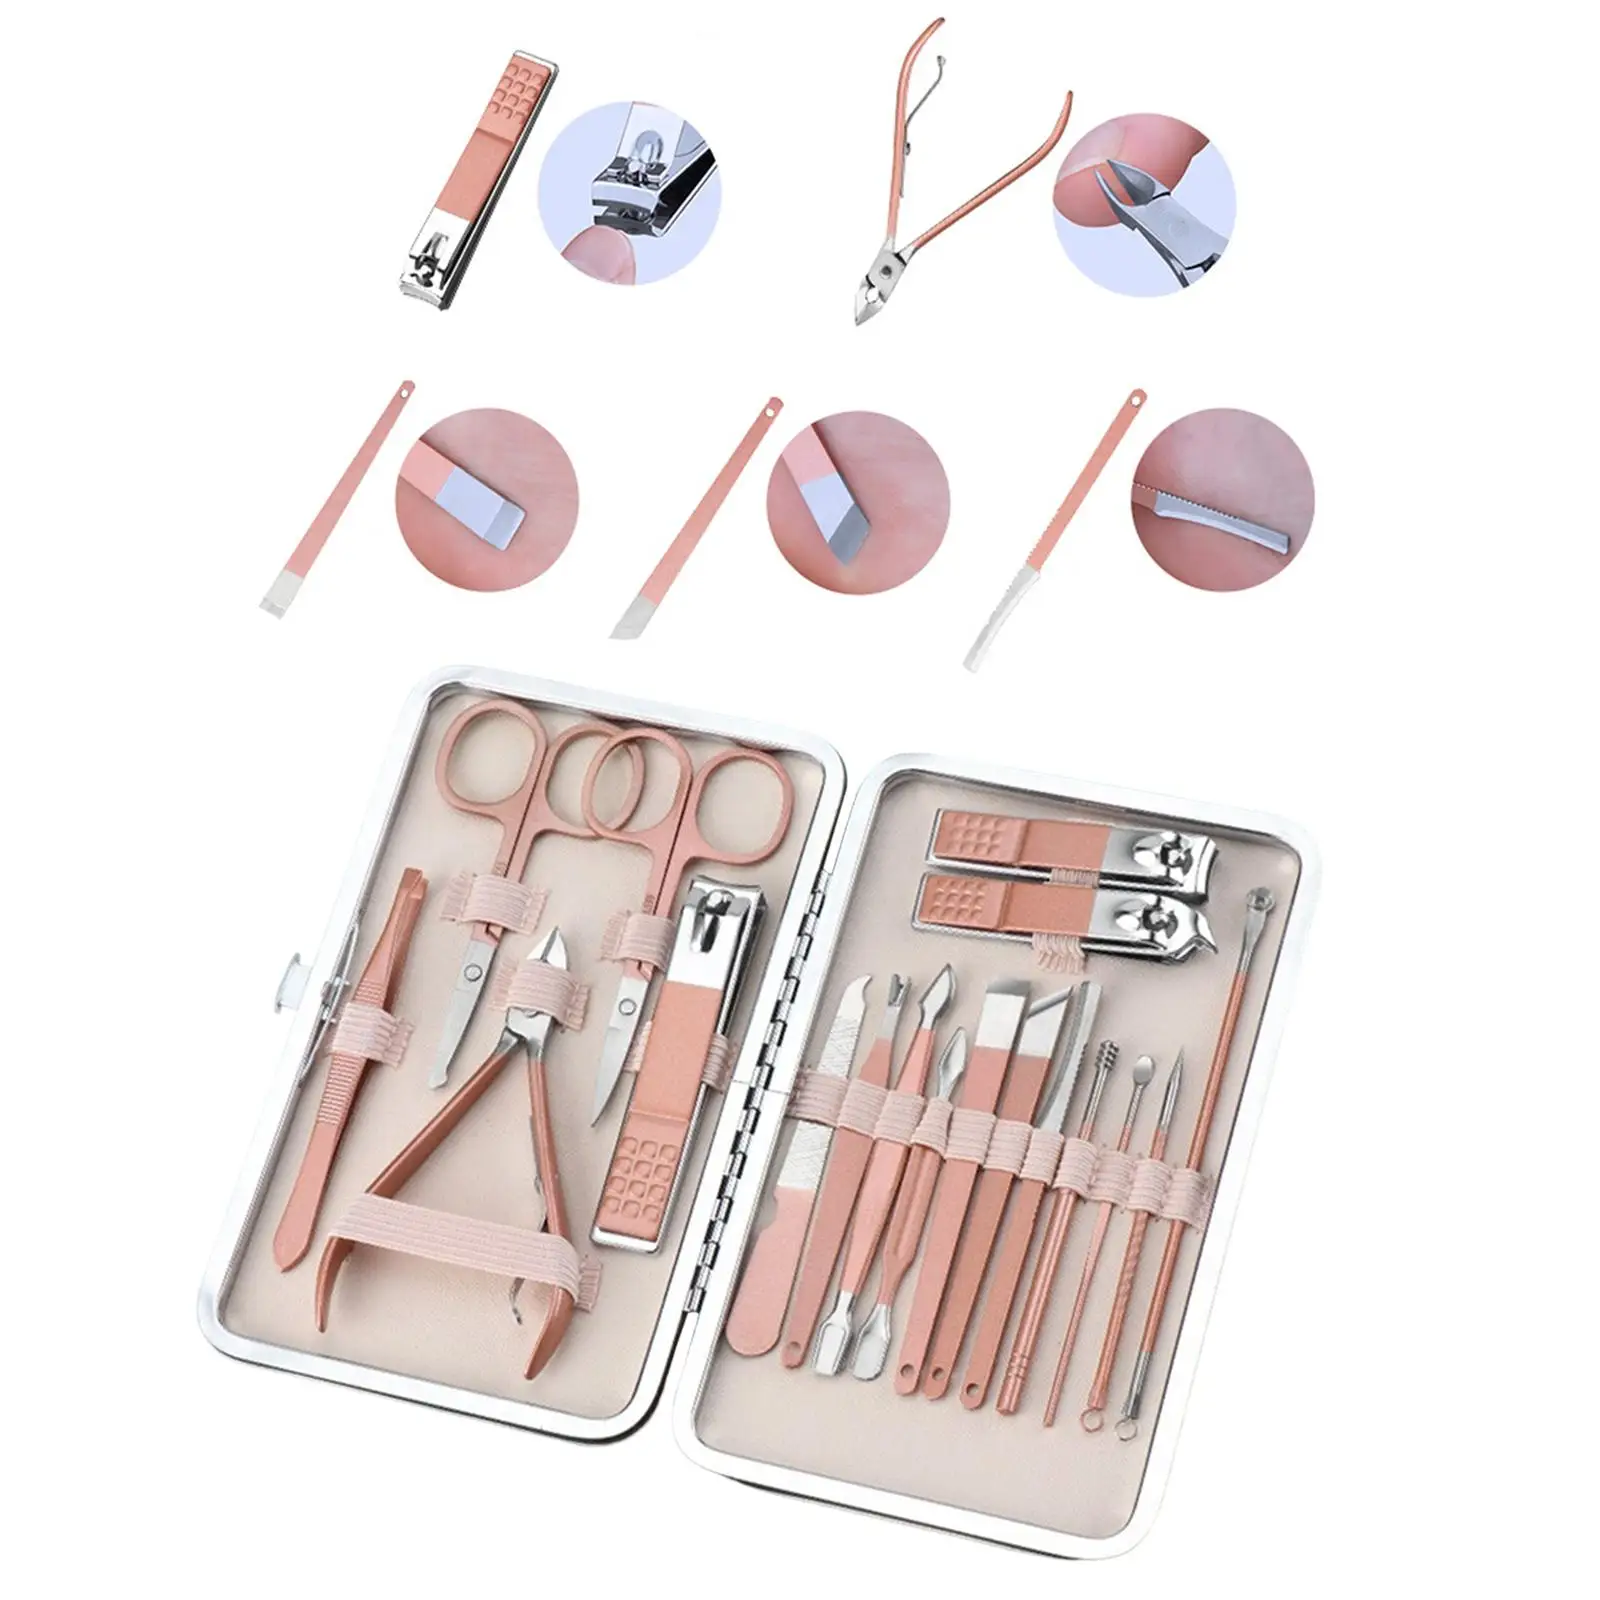 Manicure Set Fingernails Toenails Care Nail Clippers Grooming Kit for beauty Salon